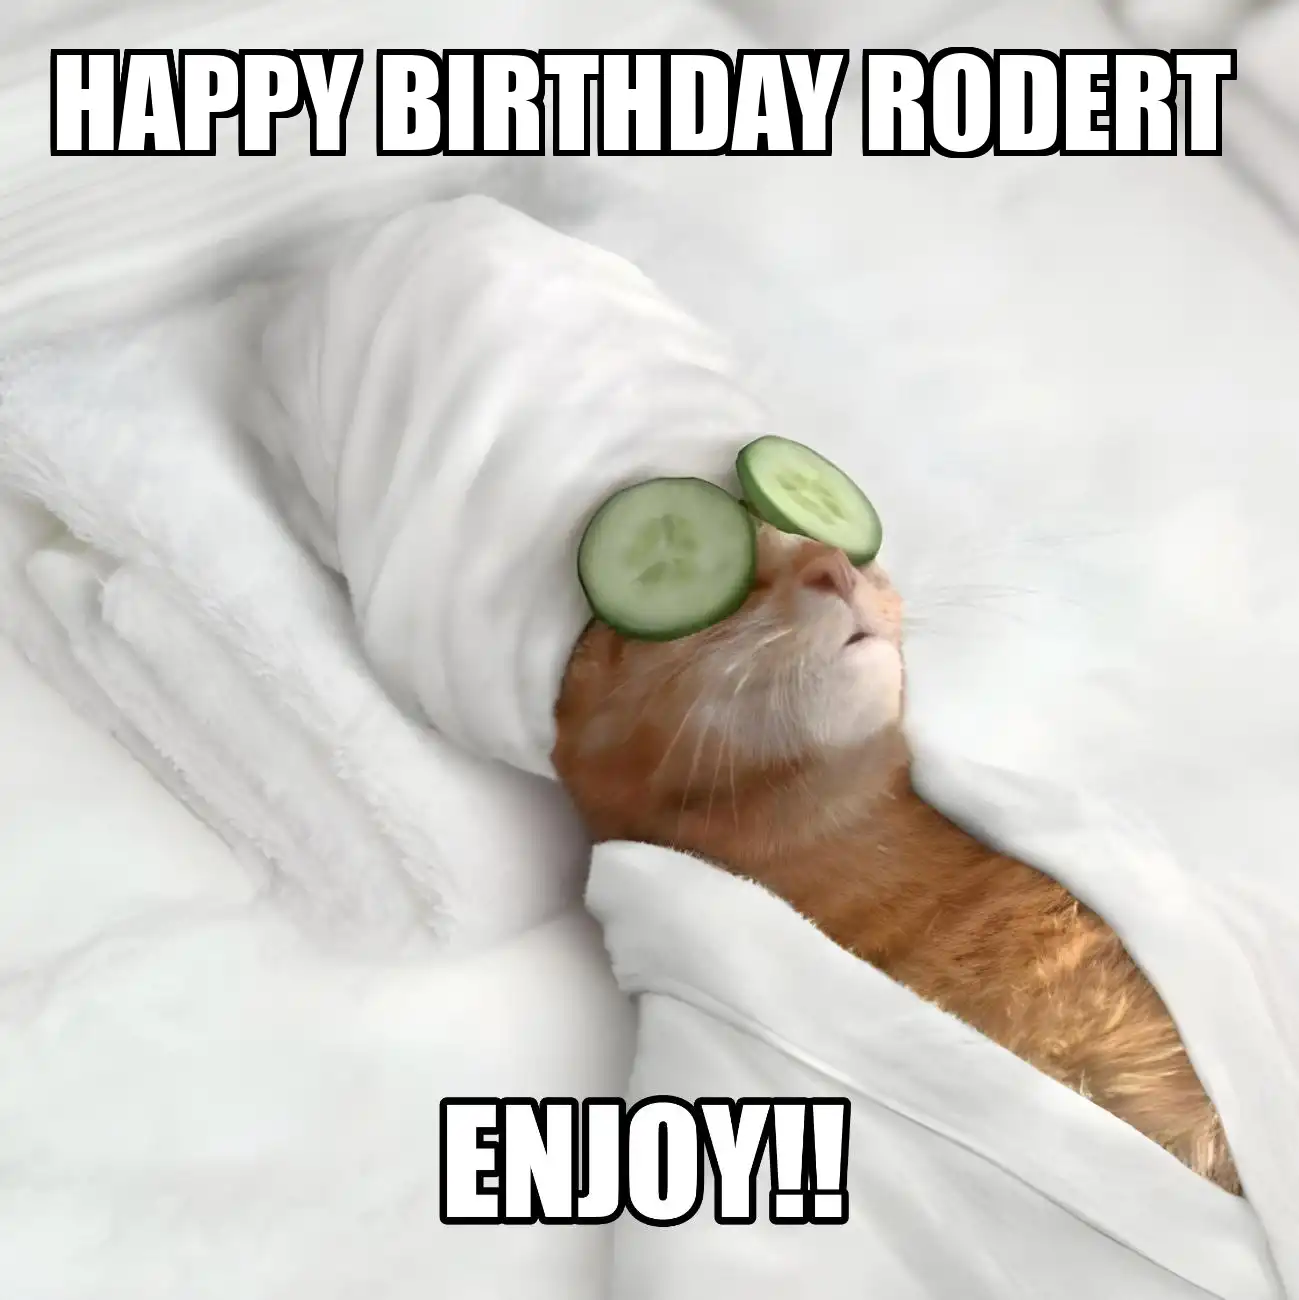 Happy Birthday Rodert Enjoy Cat Meme